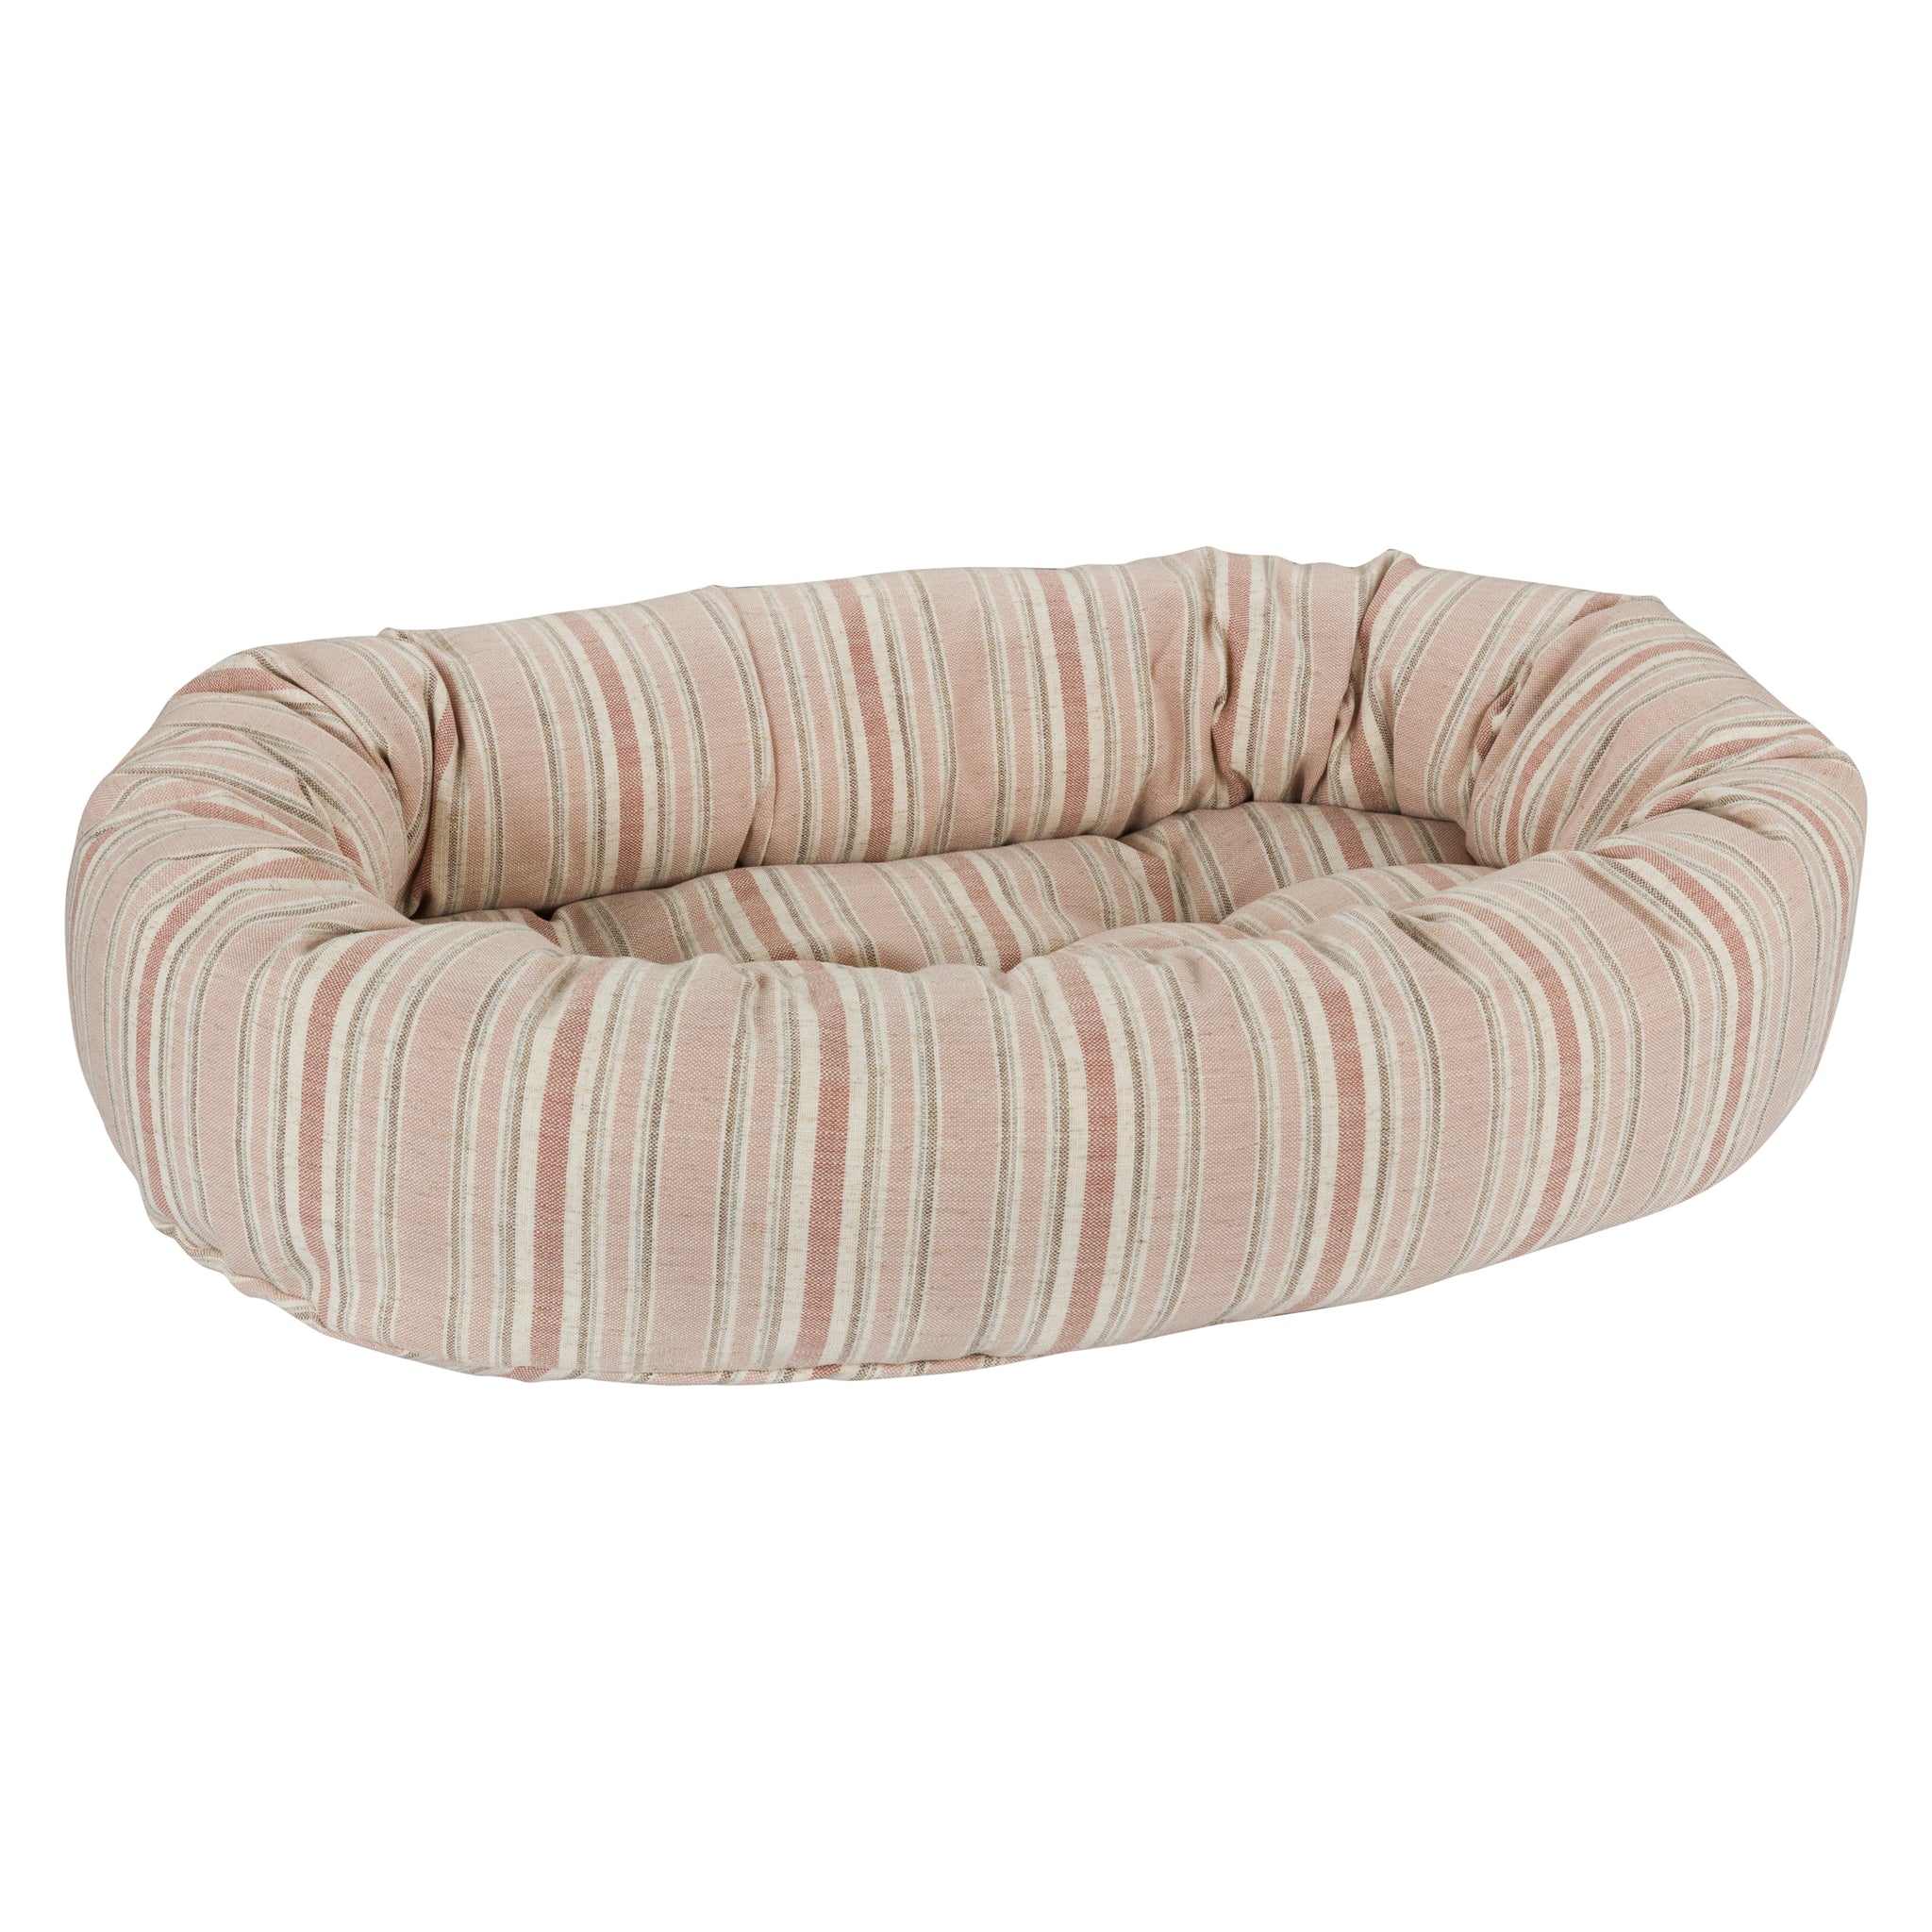 Microvelvet - Donut Bed - Sanibel Stripe - Dog Bed